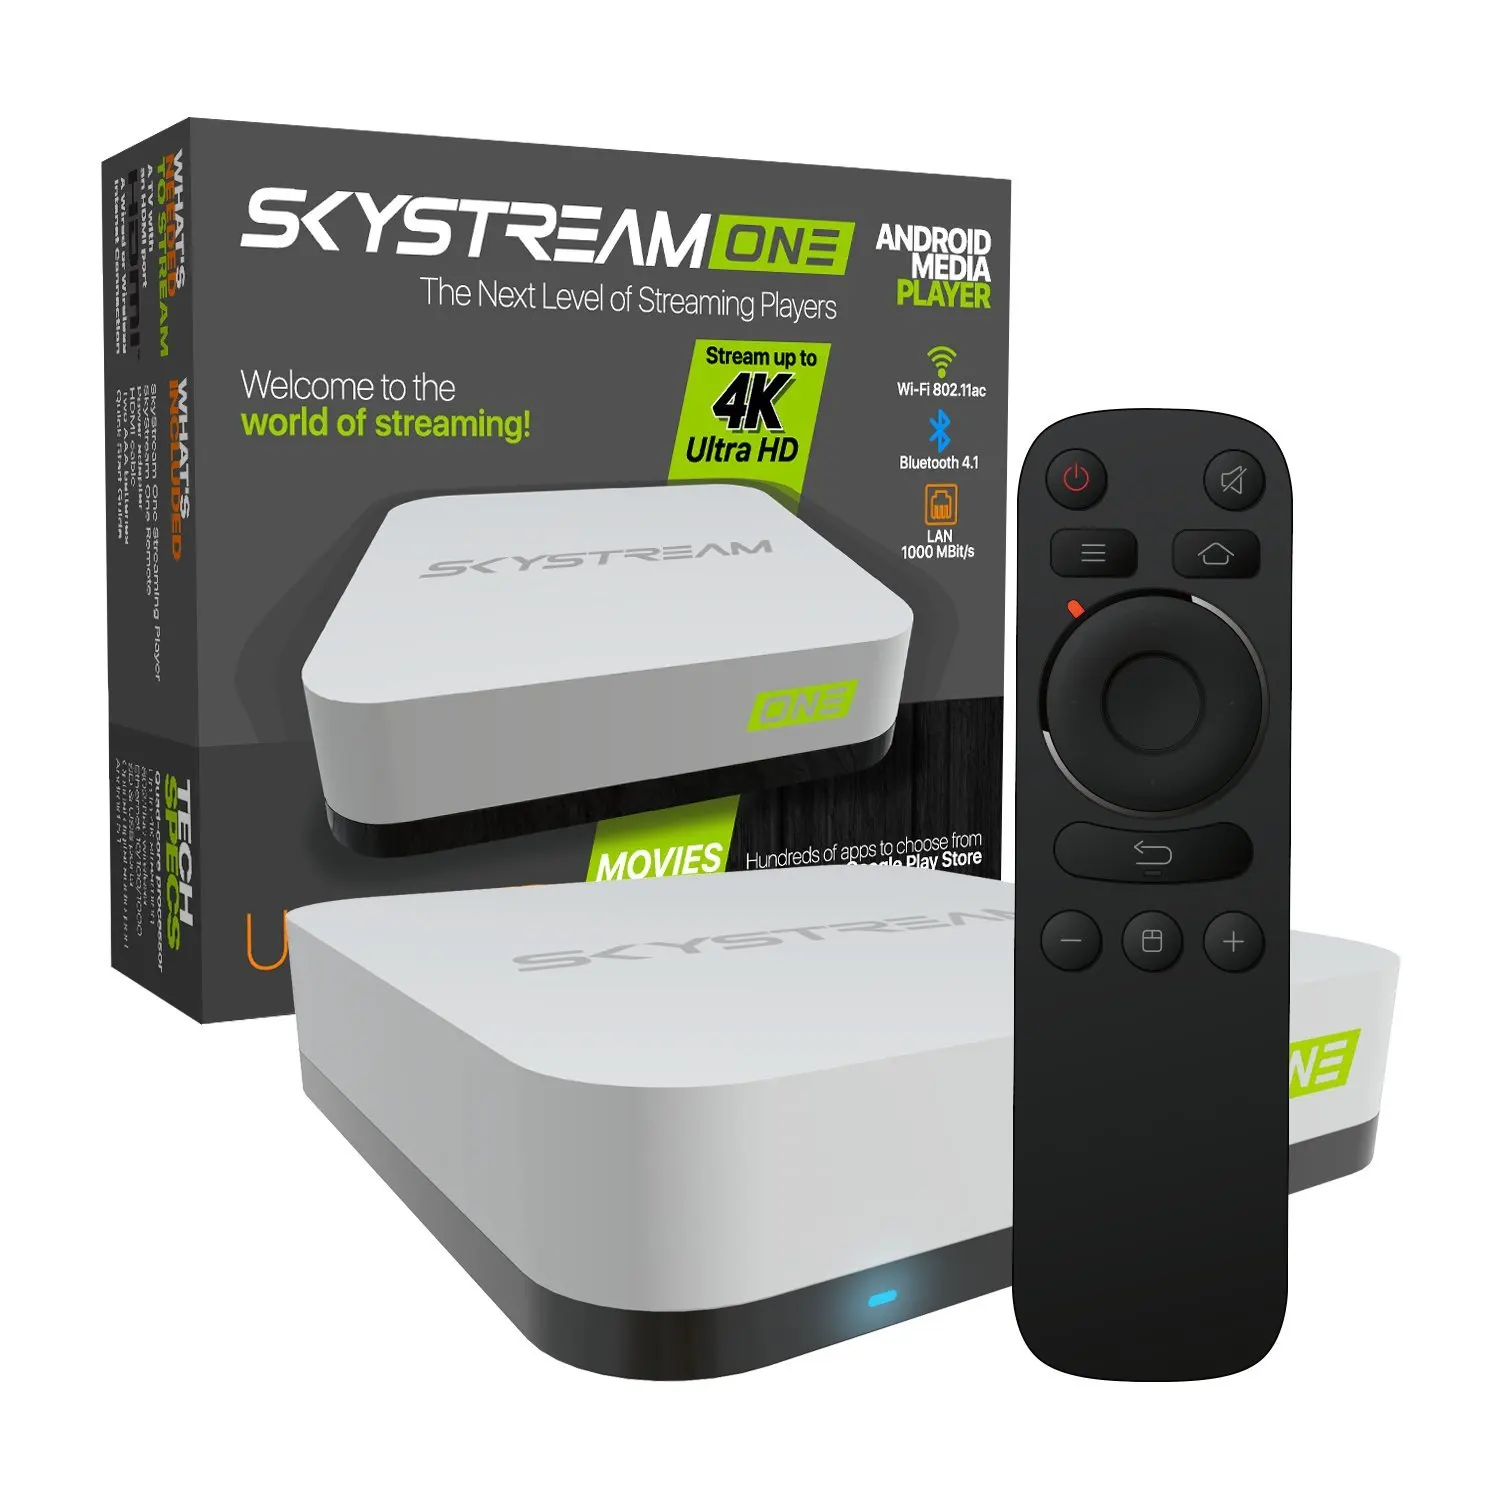 Skystream. Skystream Networks. Skystream Networks EMR 50. Android Media Player st7 отзывы.